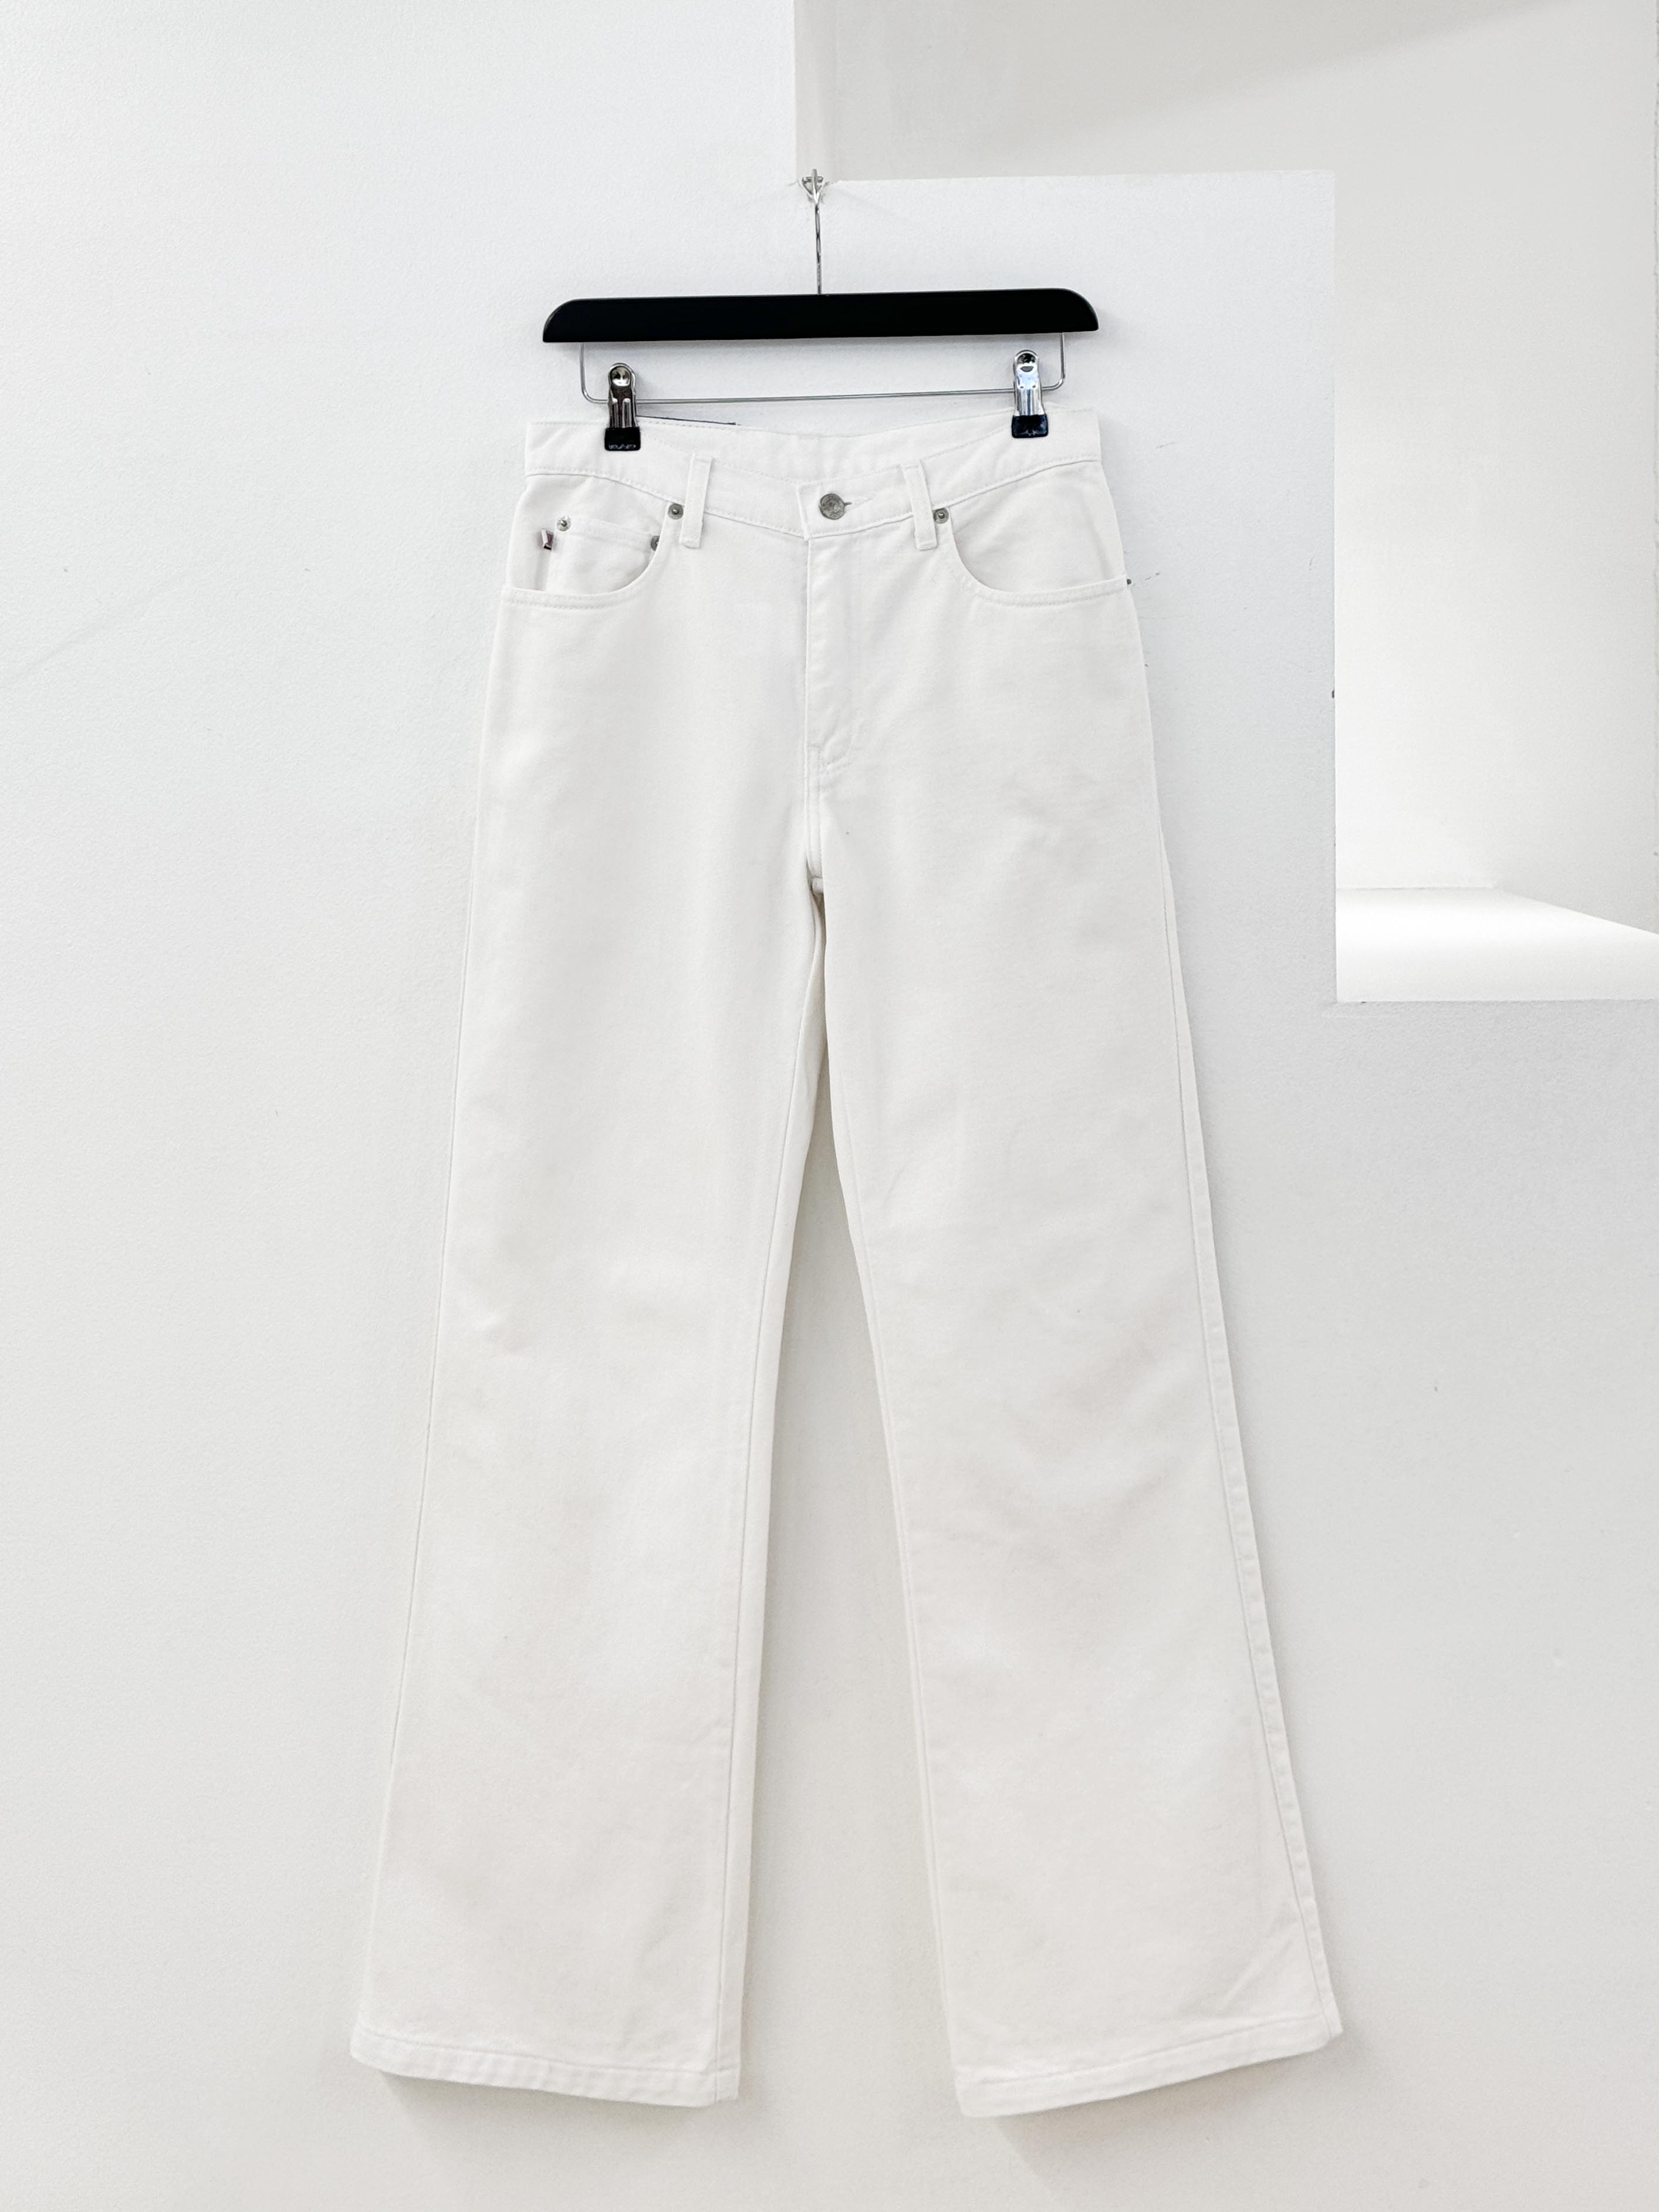 Ralph Lauren white denim pants 28inch